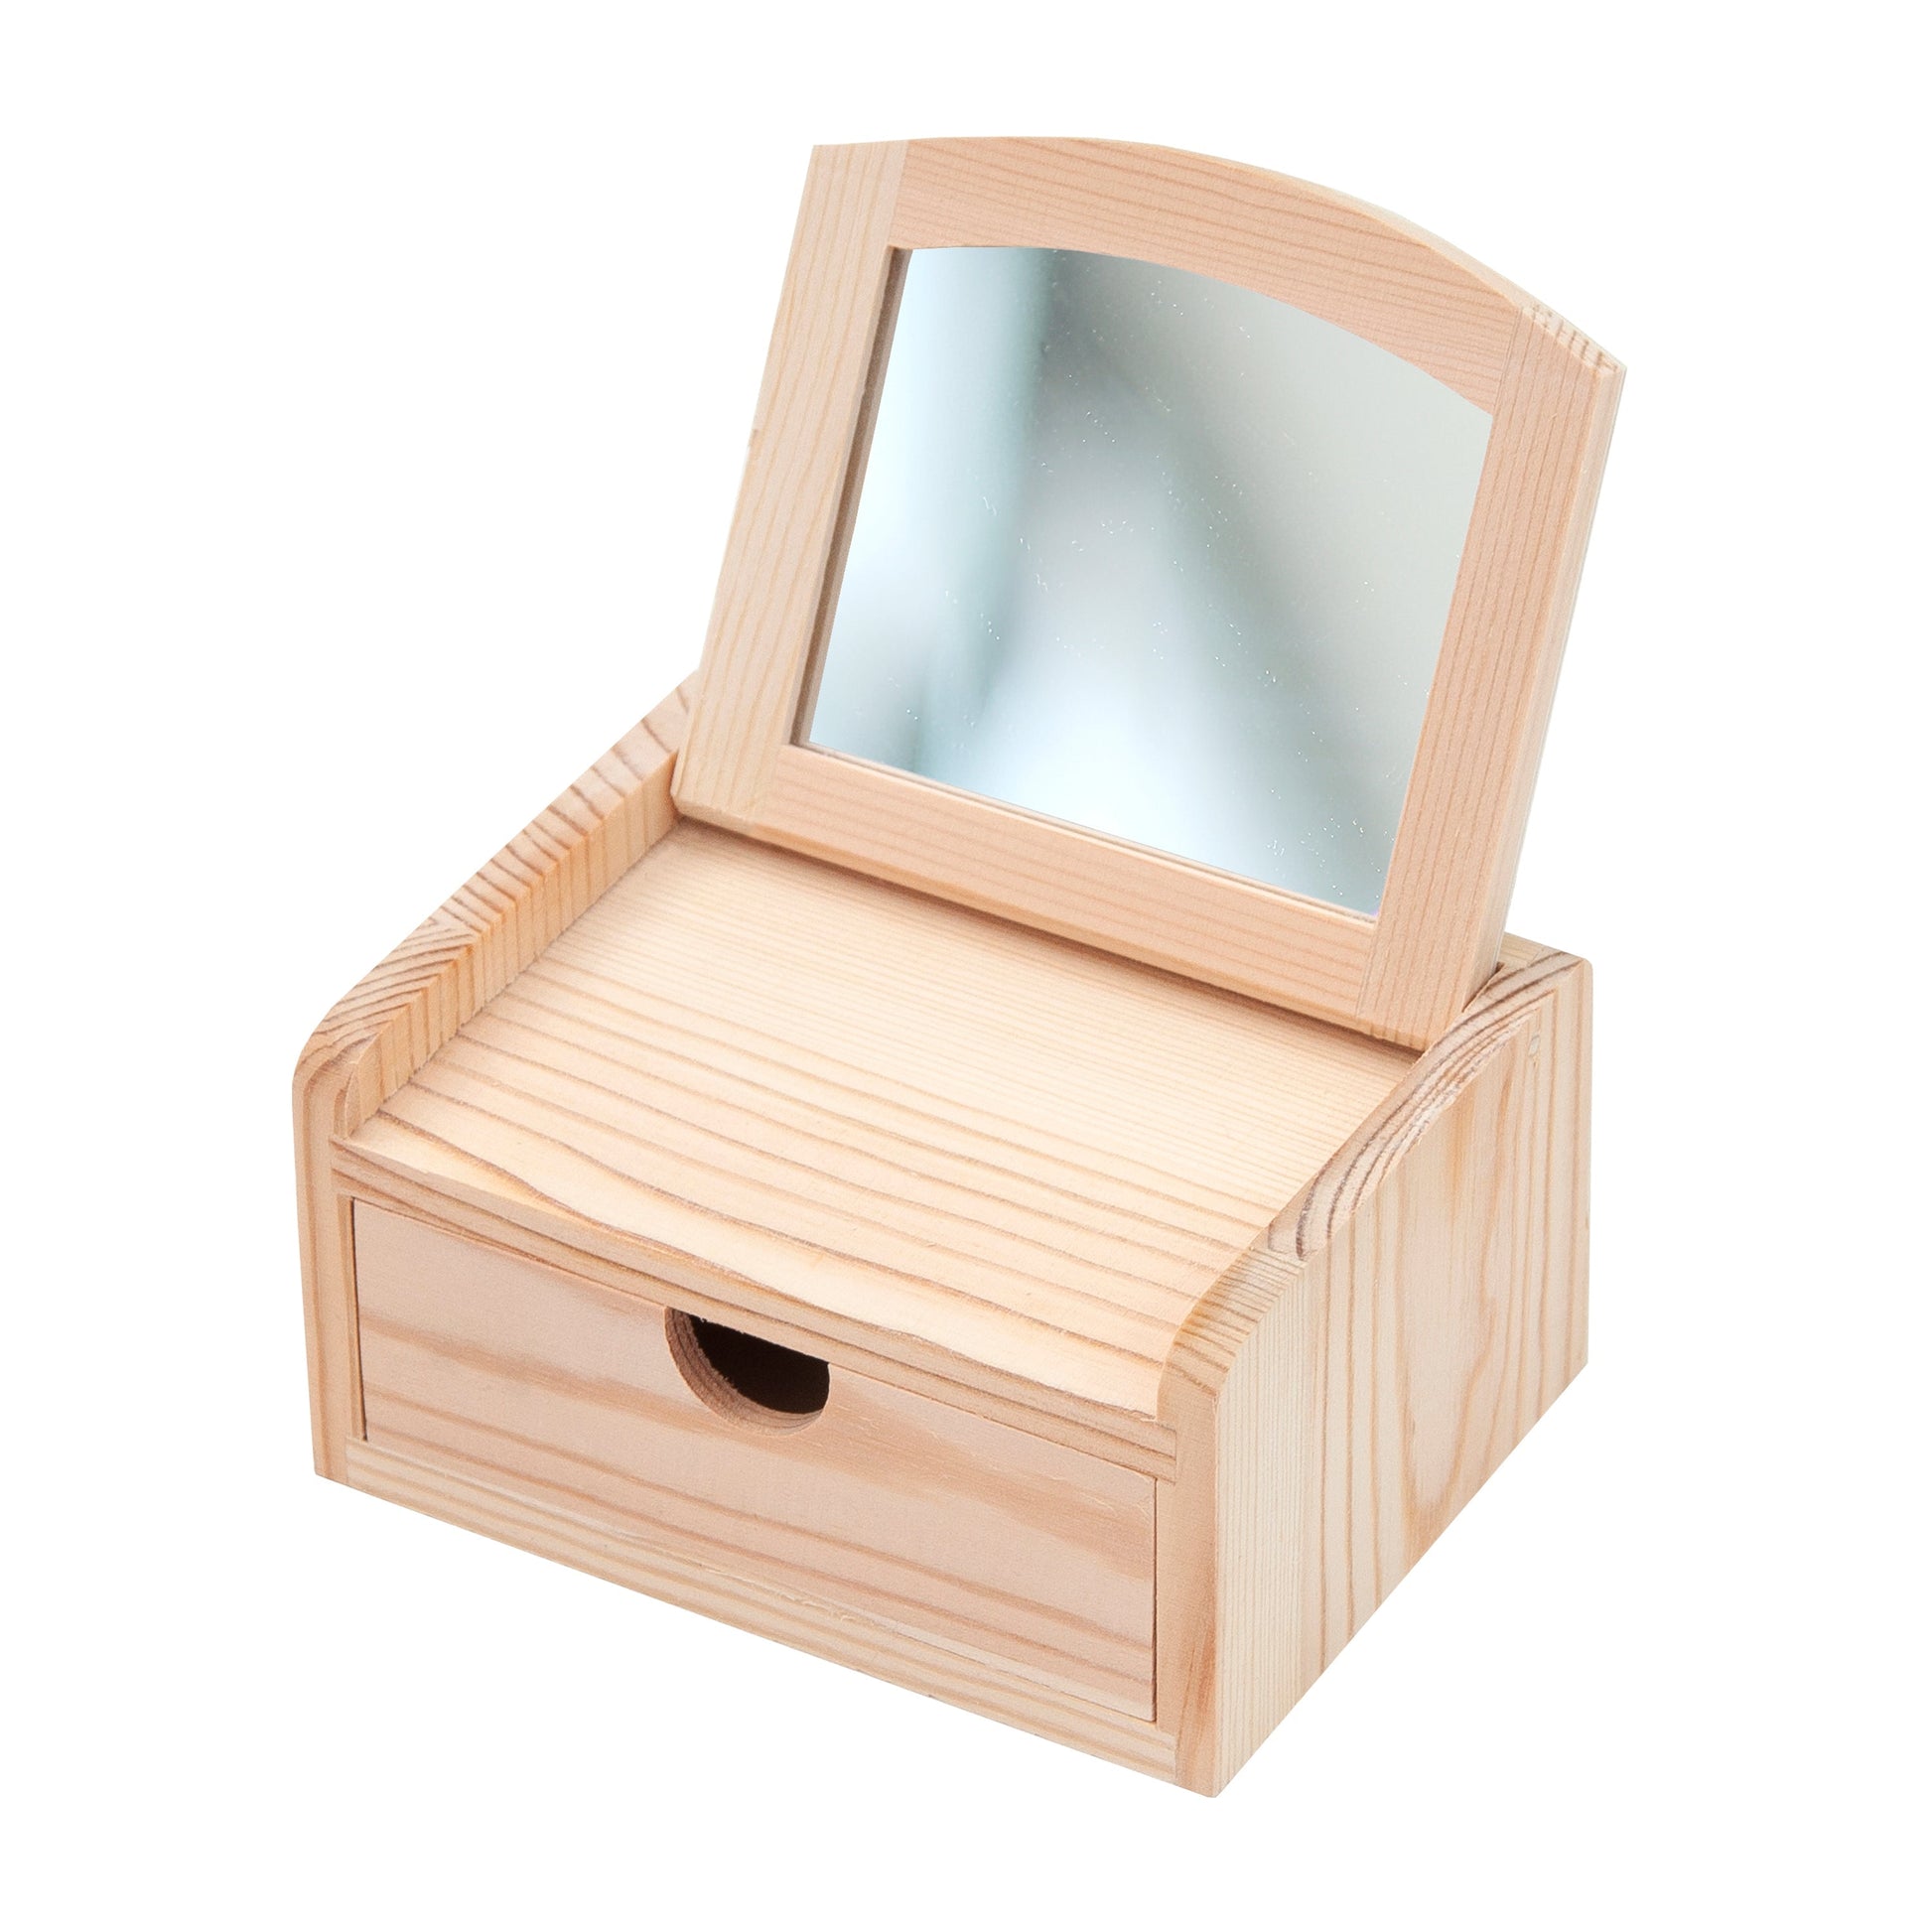 Personalized Jewellery Boxes & Storage - Personalized Kid’s Rainbow Jewellery Box 